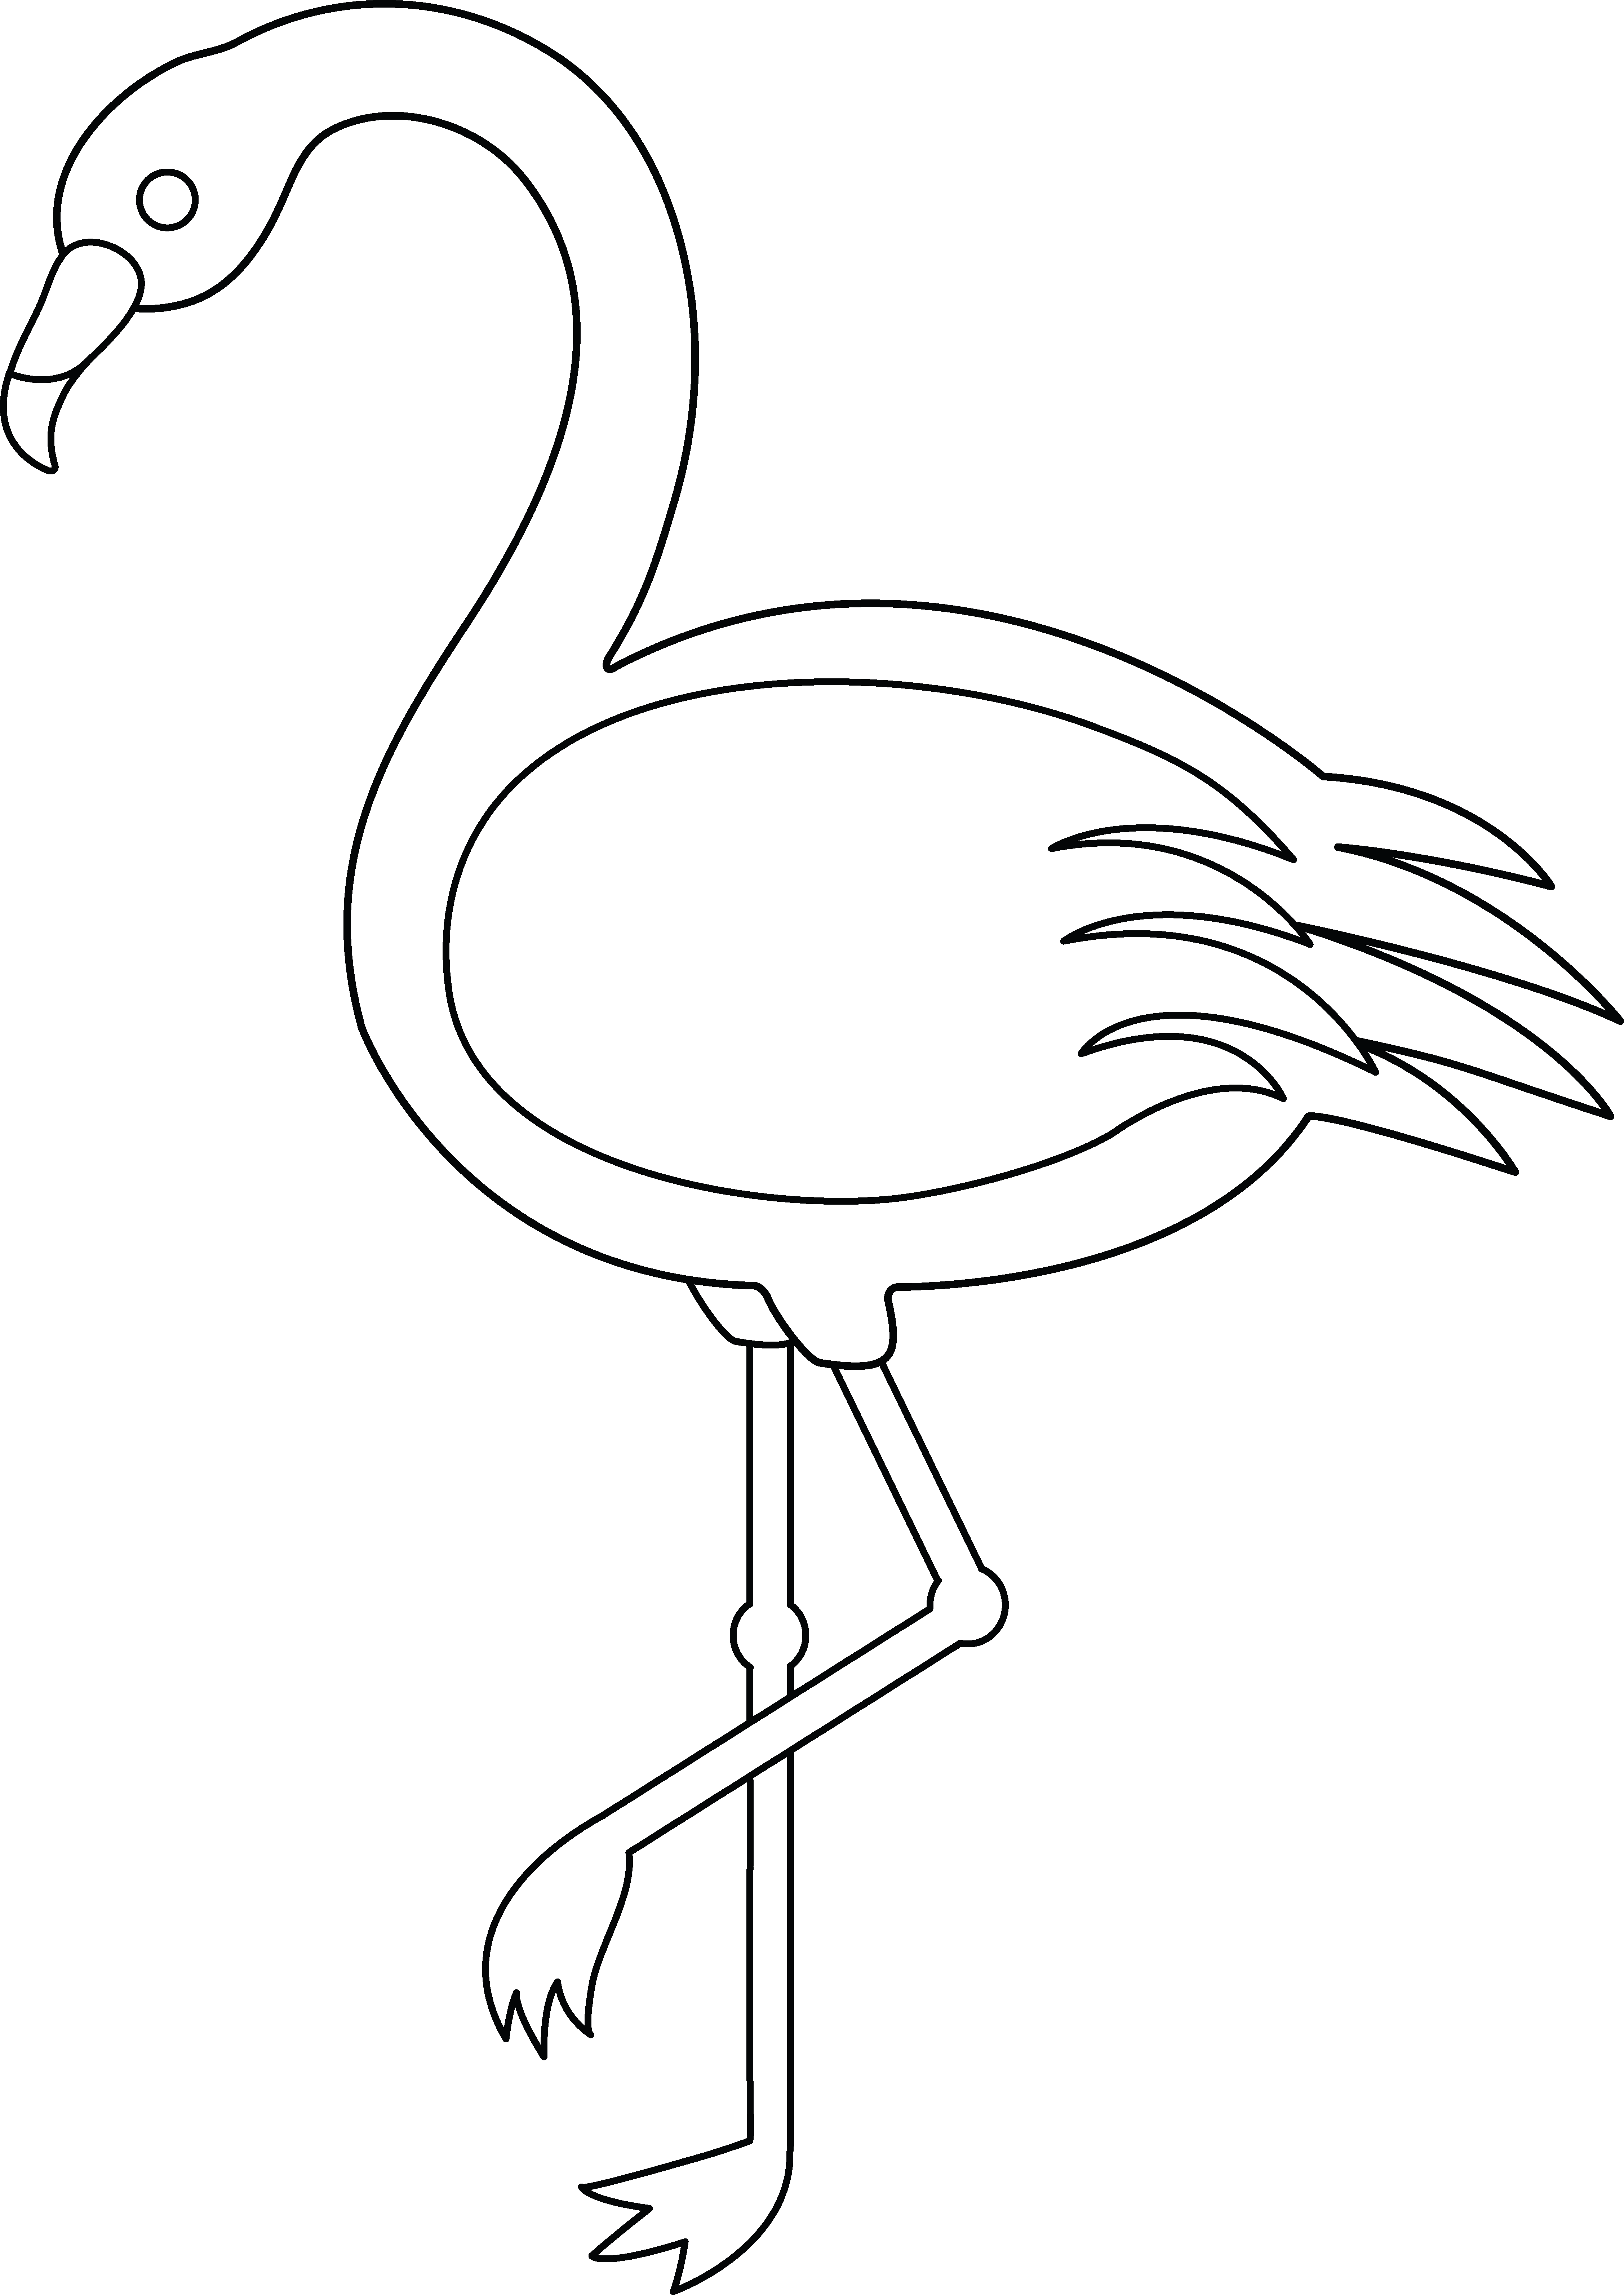 clipart love flamingo